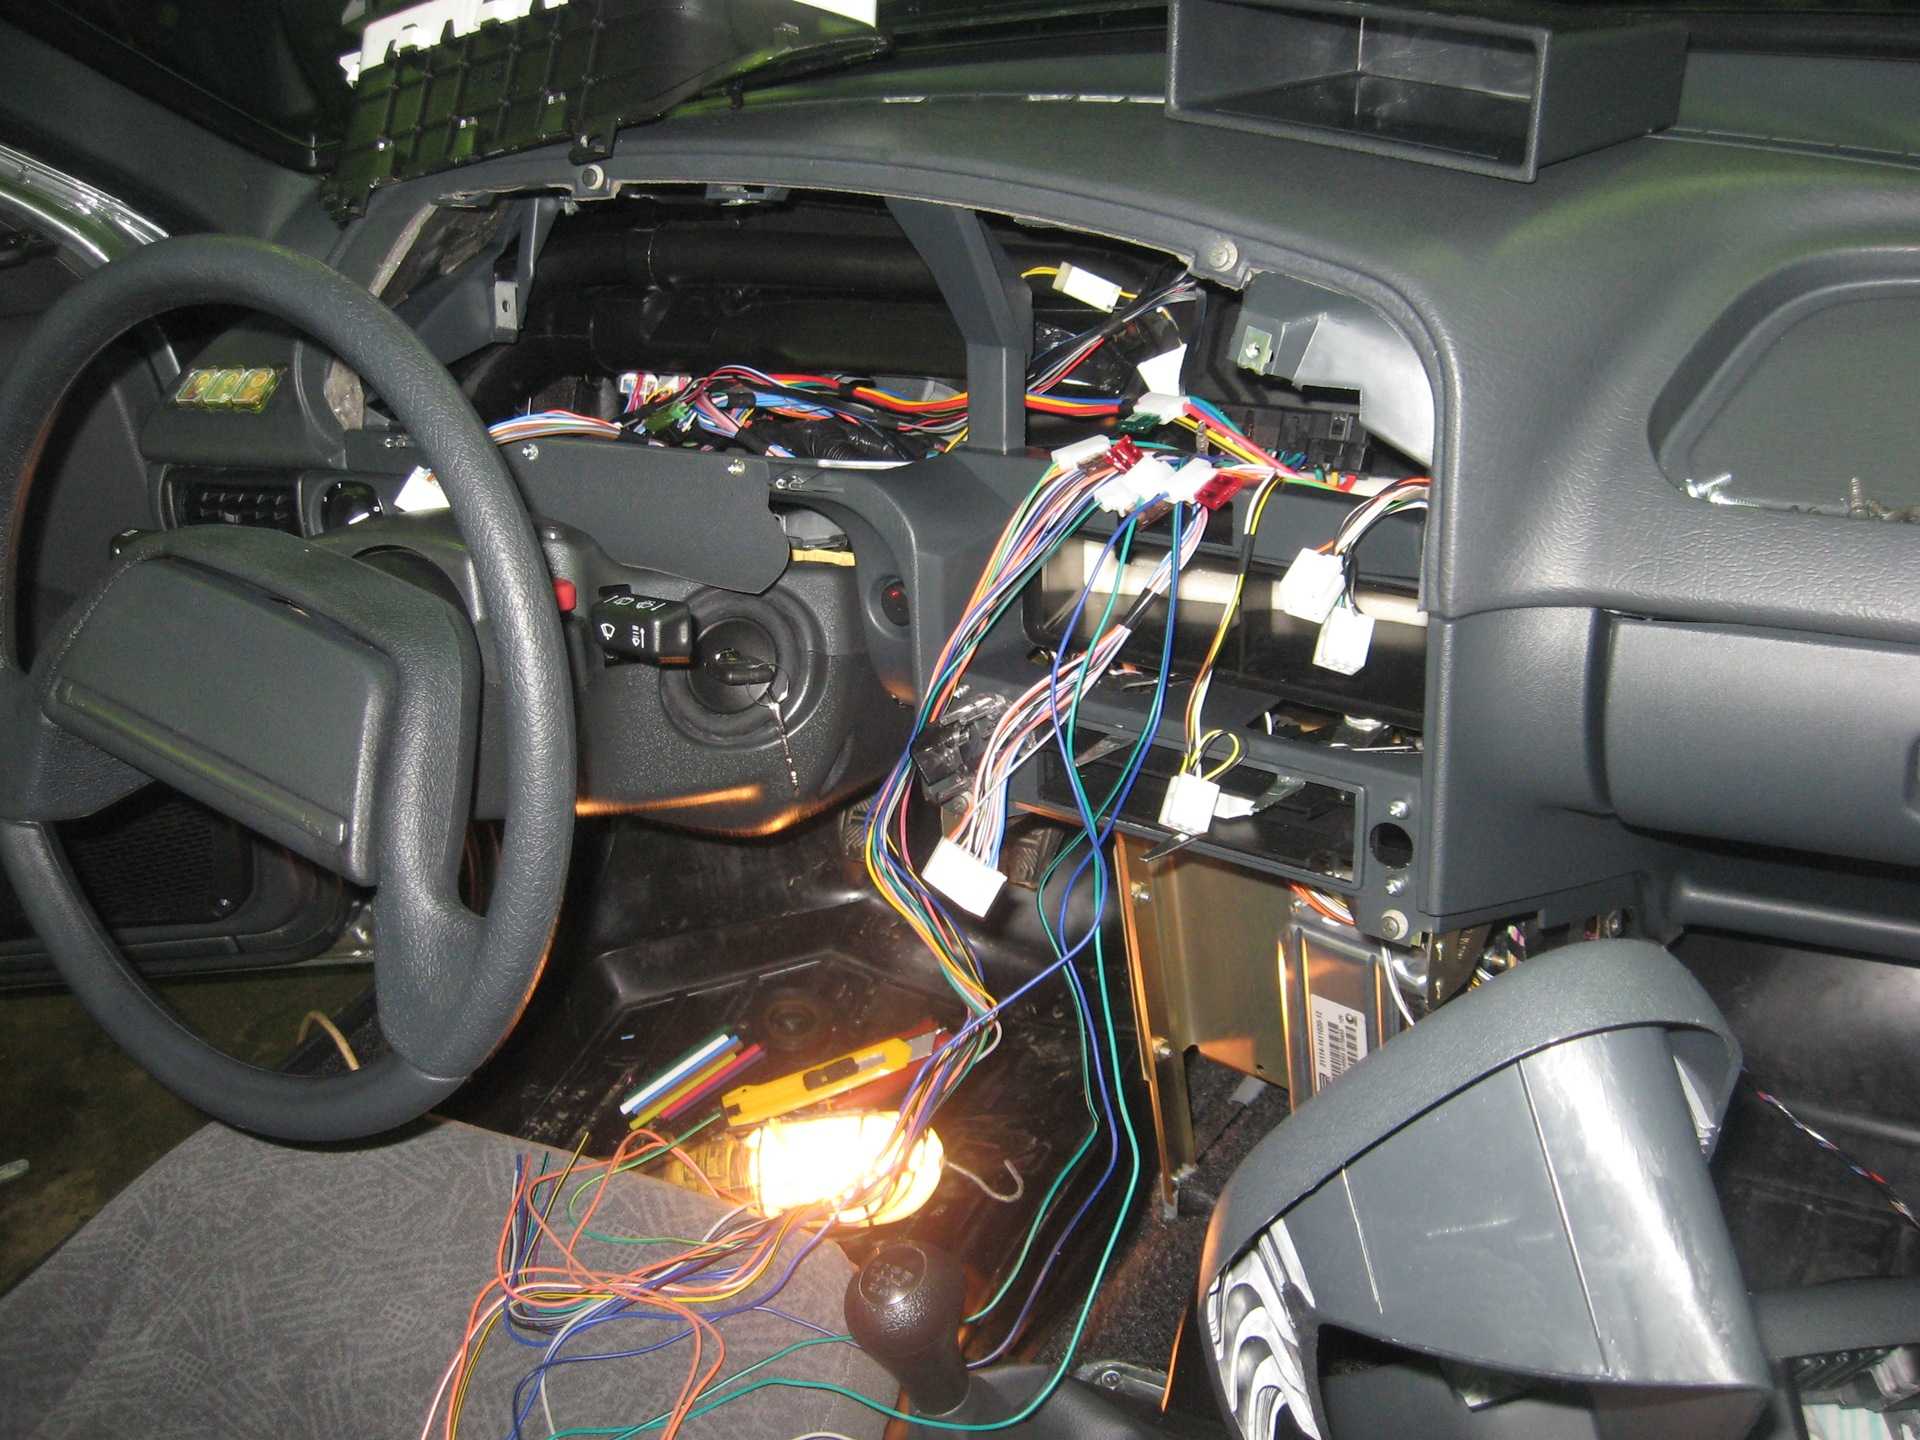 Ремонт сигнализации автомобиля своими руками | auto-wiki